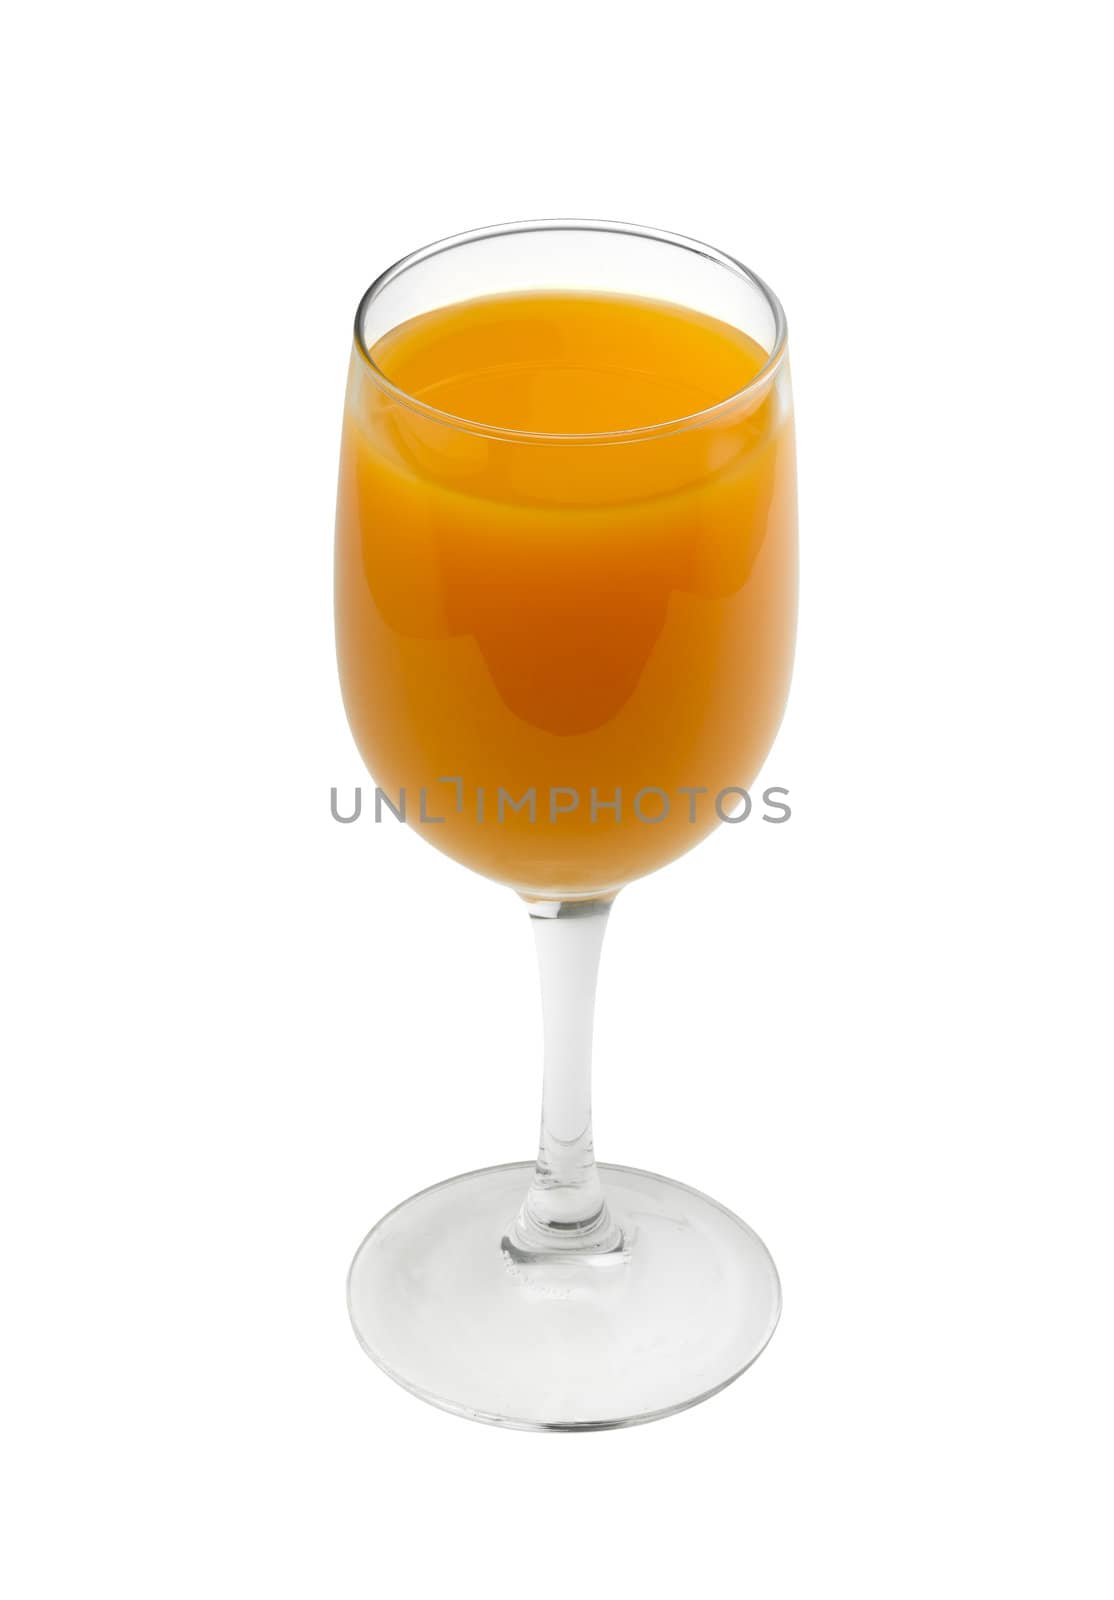 Orange juice by pbombaert